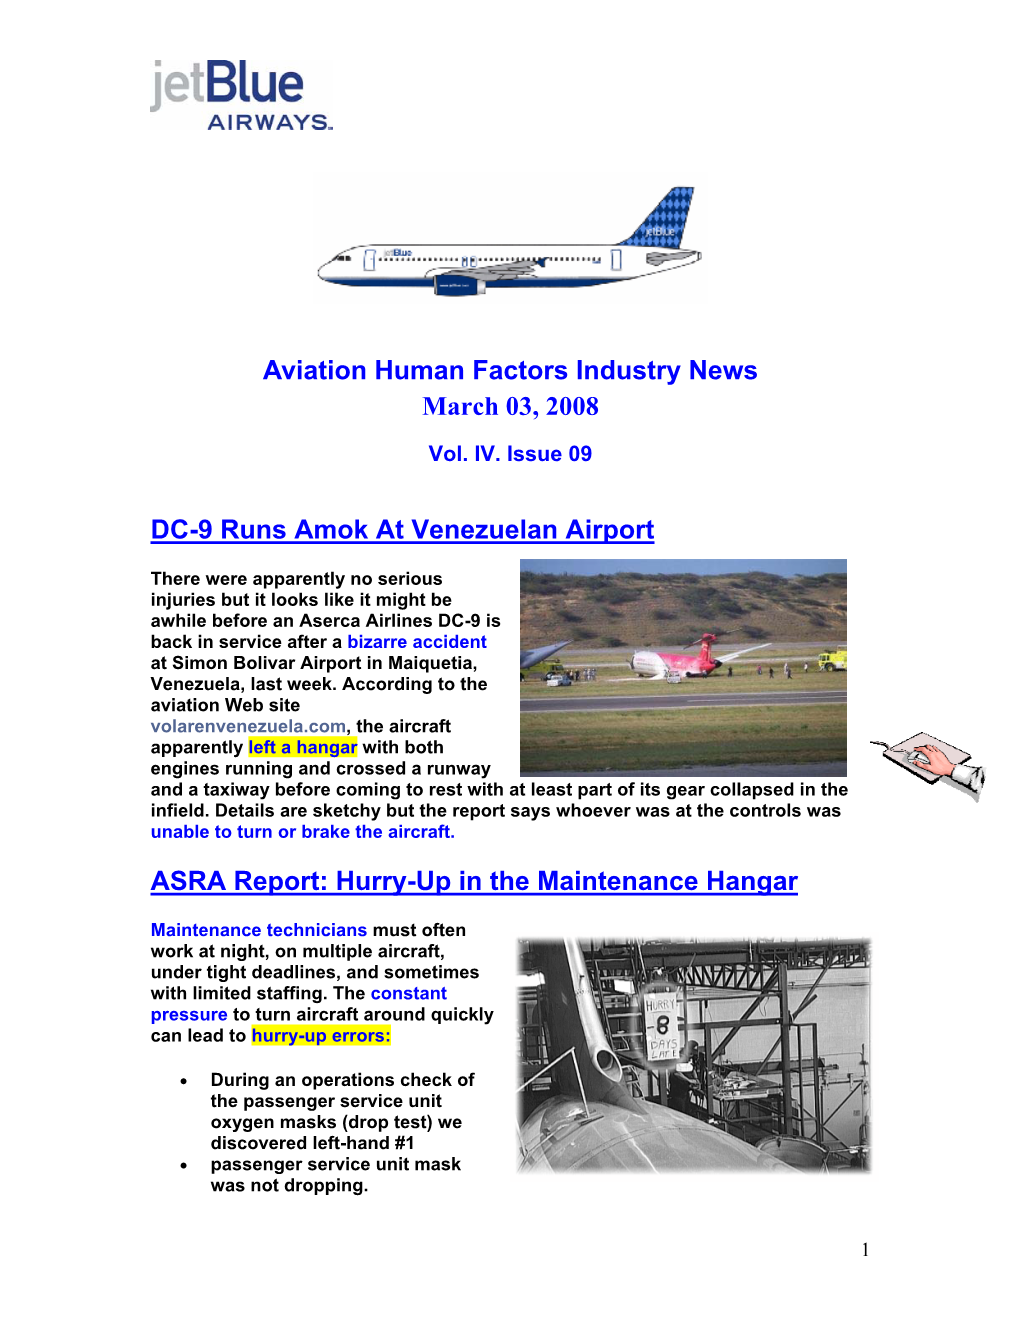 Aviation Human Factors Industry News March 03, 2008 DC-9 Runs Amok at Venezuelan Airport ASRA Report